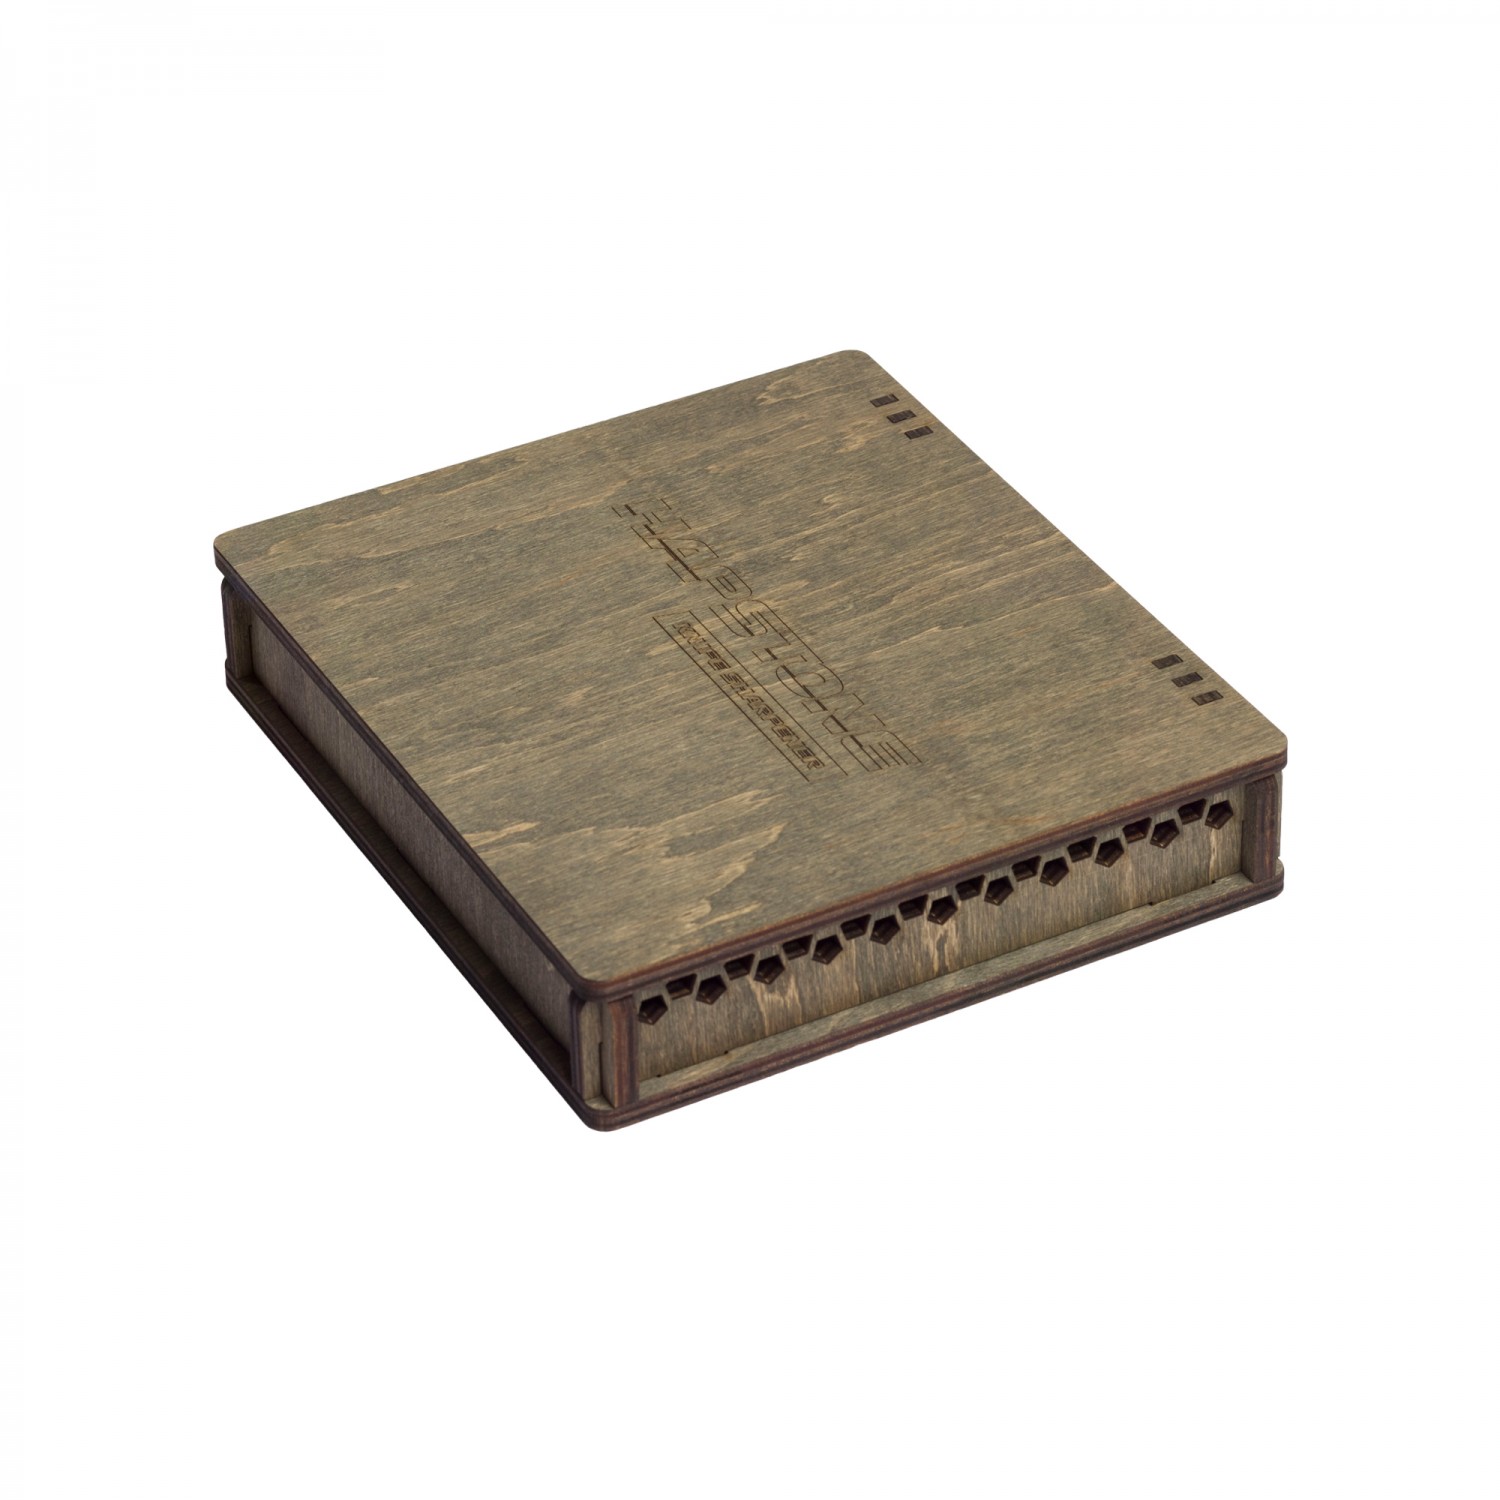 Plywood storage case for 9 stones